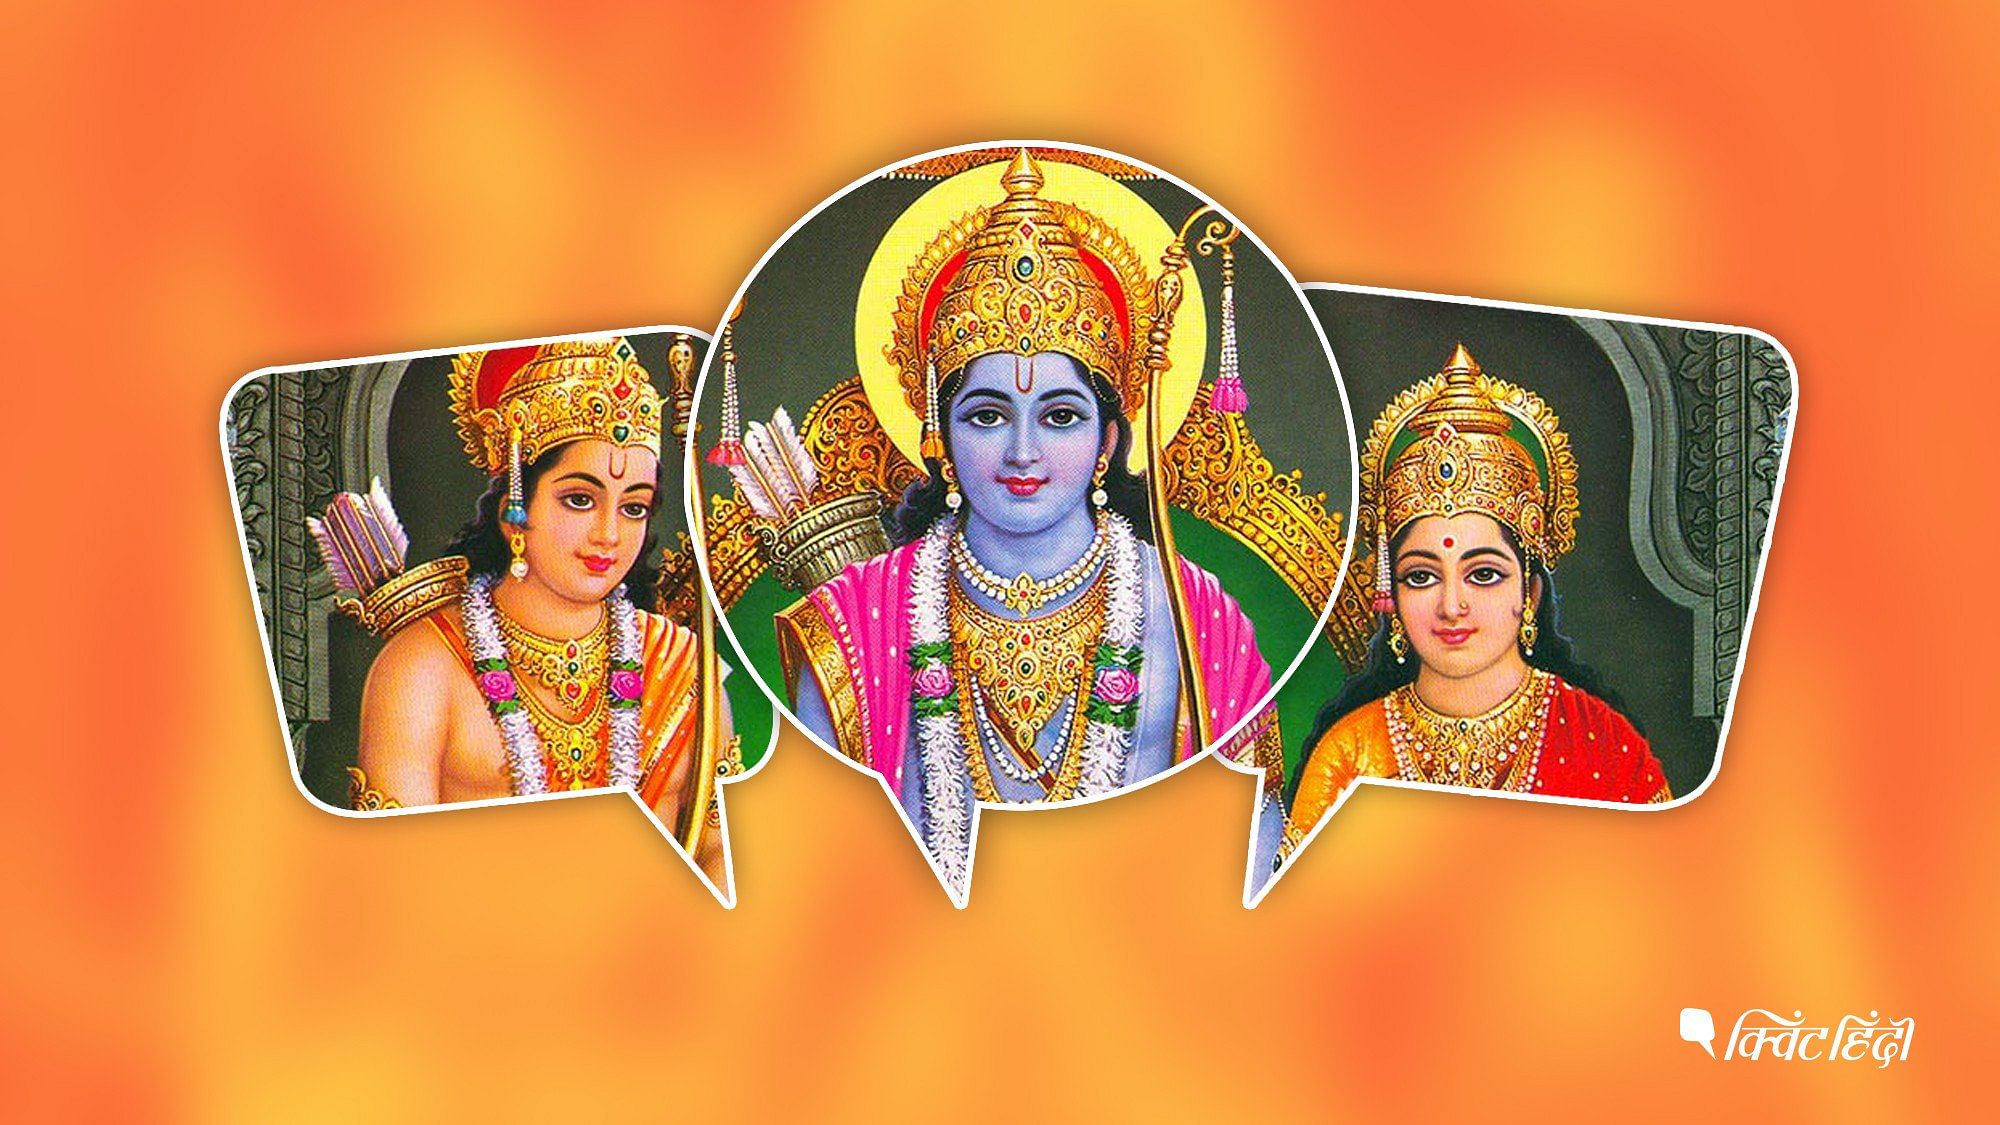 Hindus celebrate Ram Navami on Lord Ram’s birth anniversary.